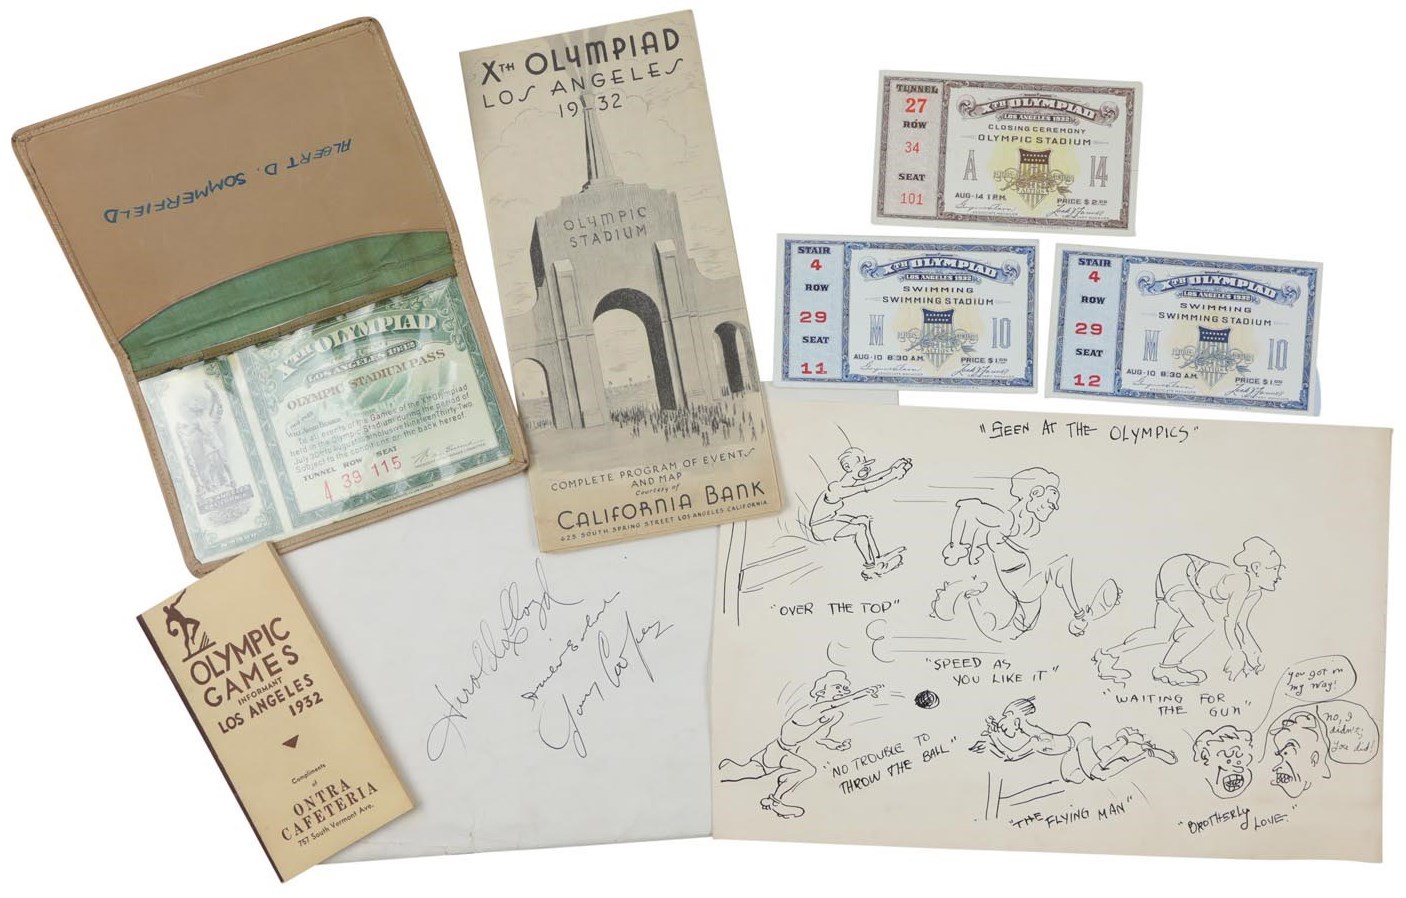 1932 Olympic Program Signed by Amelia Earhart, Harold Lloyd & Gary Cooper (PSA)